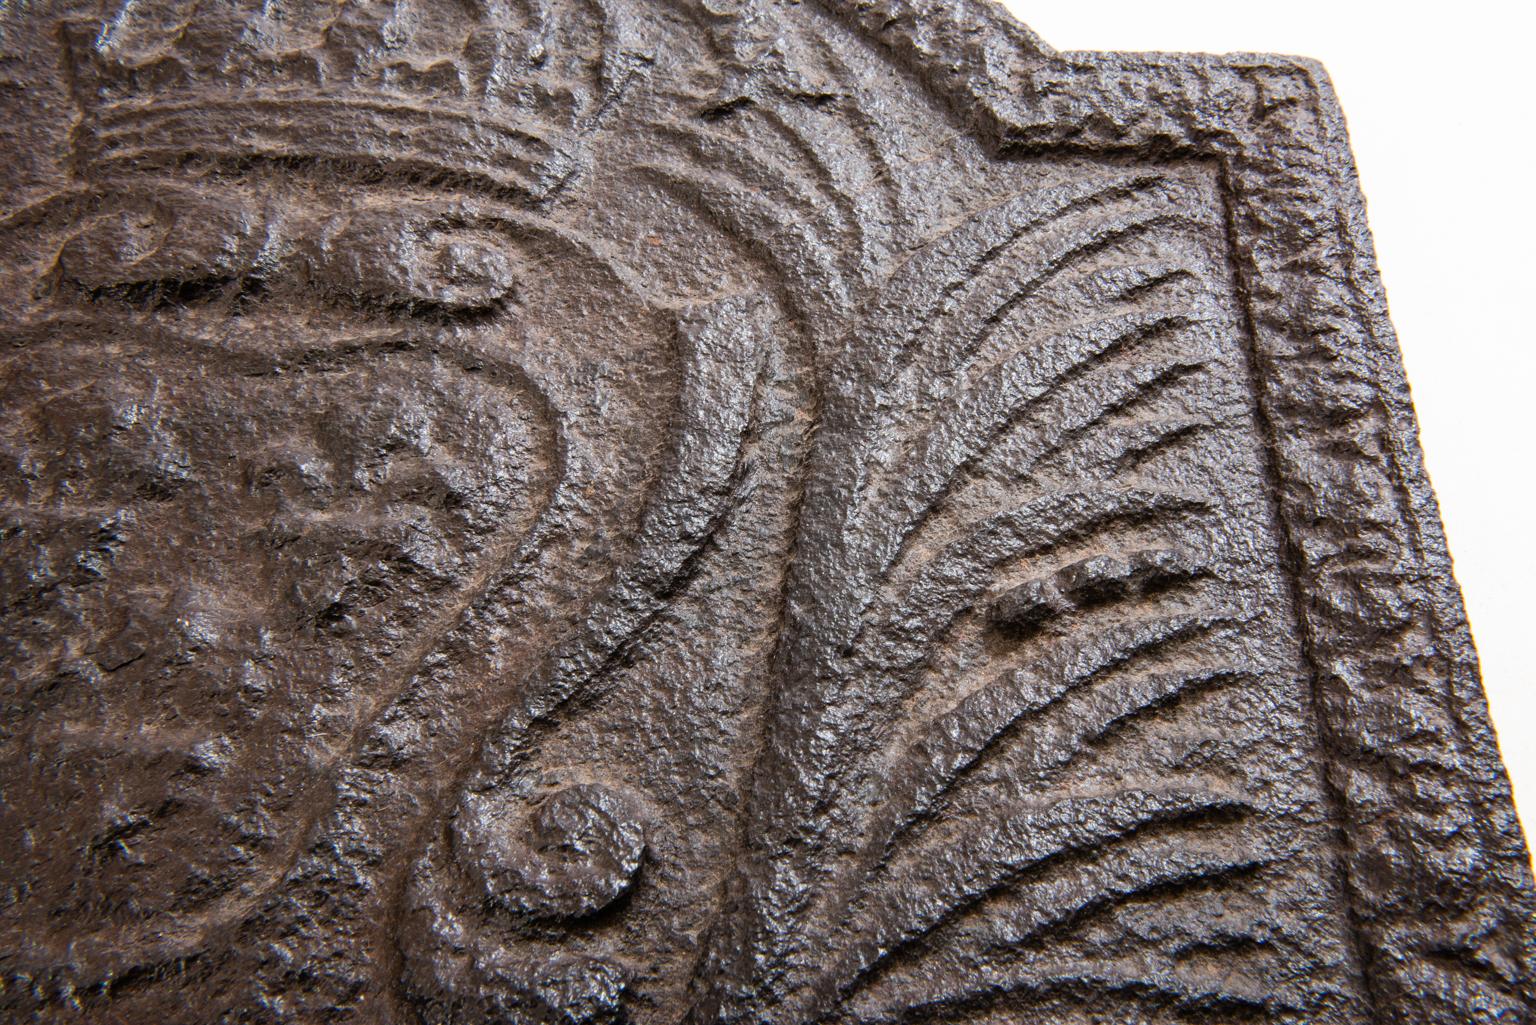 17th Century Cast Iron Fireplace Plate with Heraldic Emblem